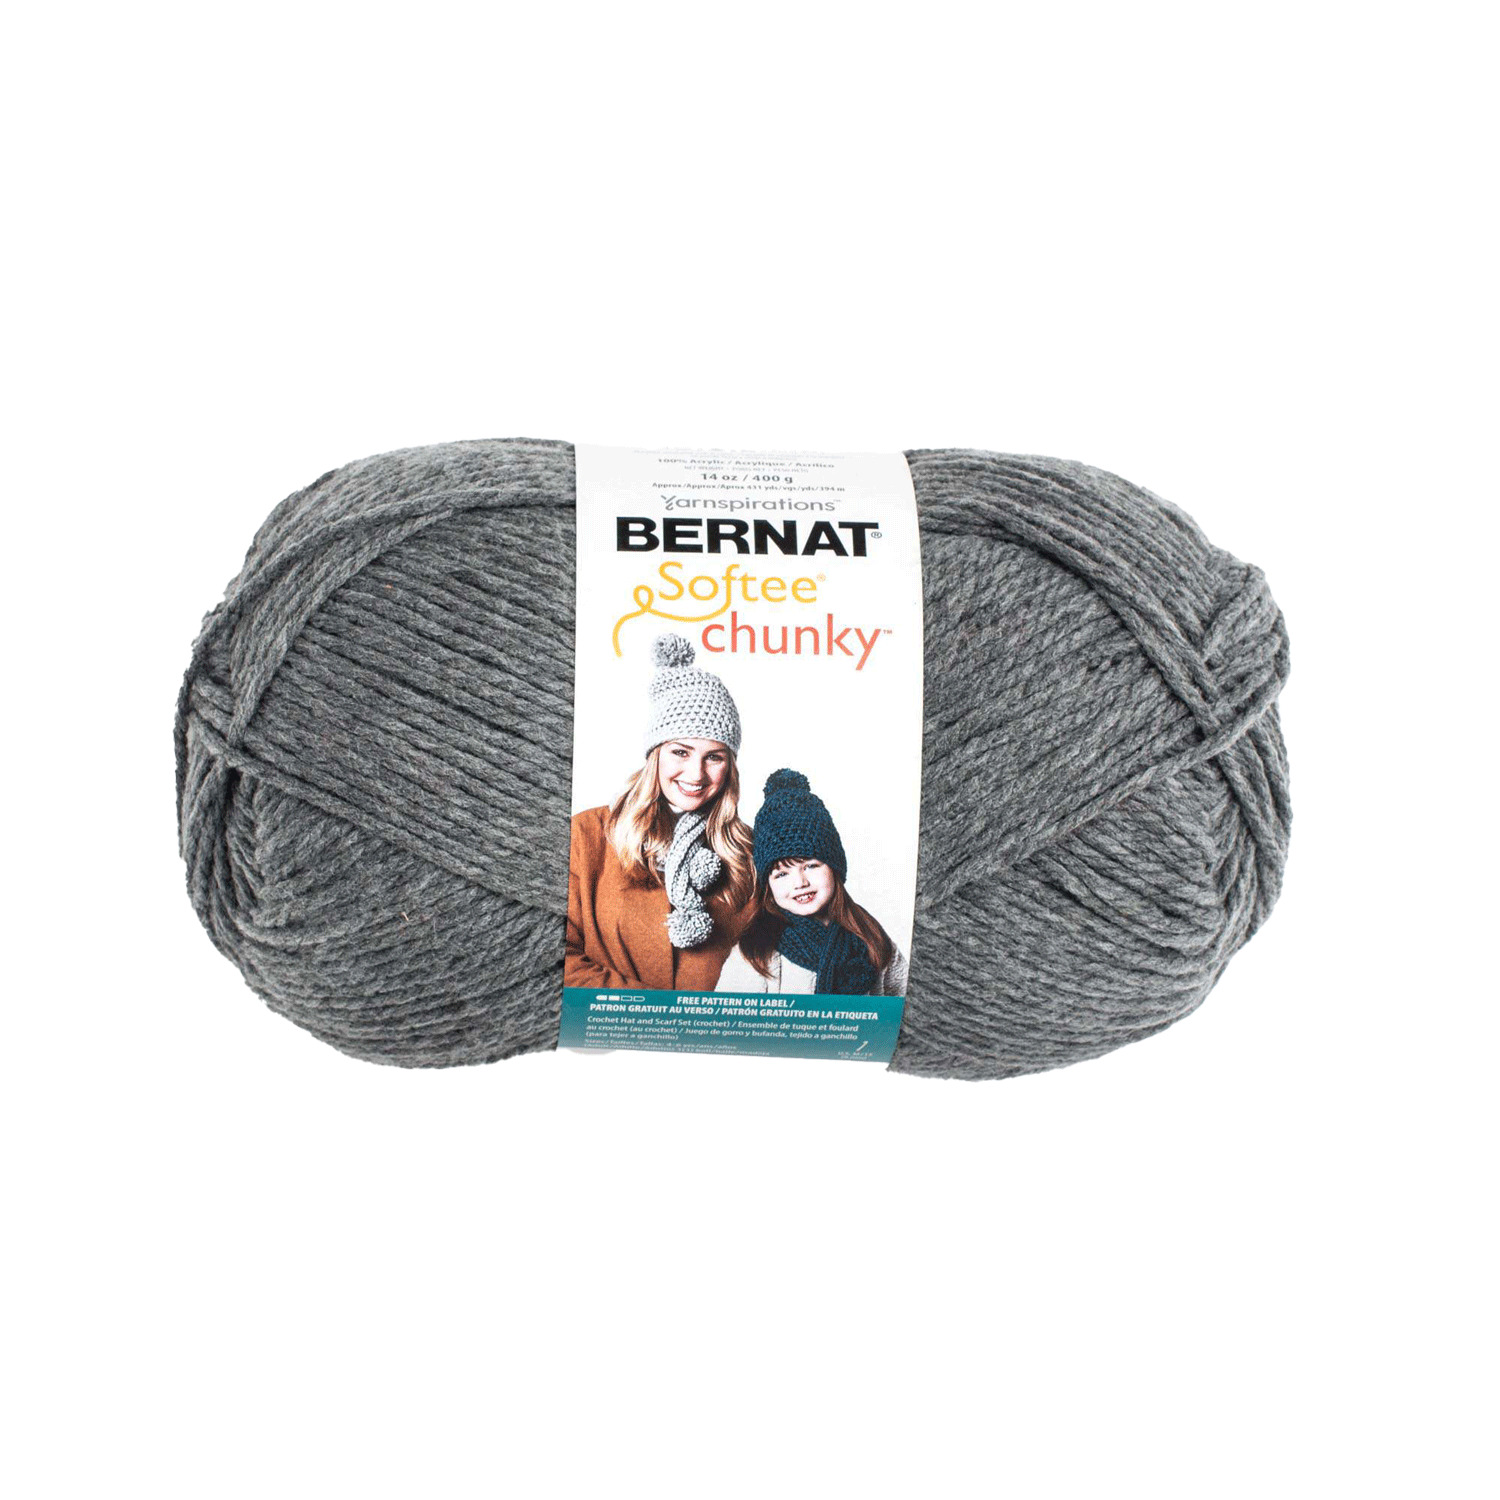 Bernat Softee Chunky - Yarn, True grey